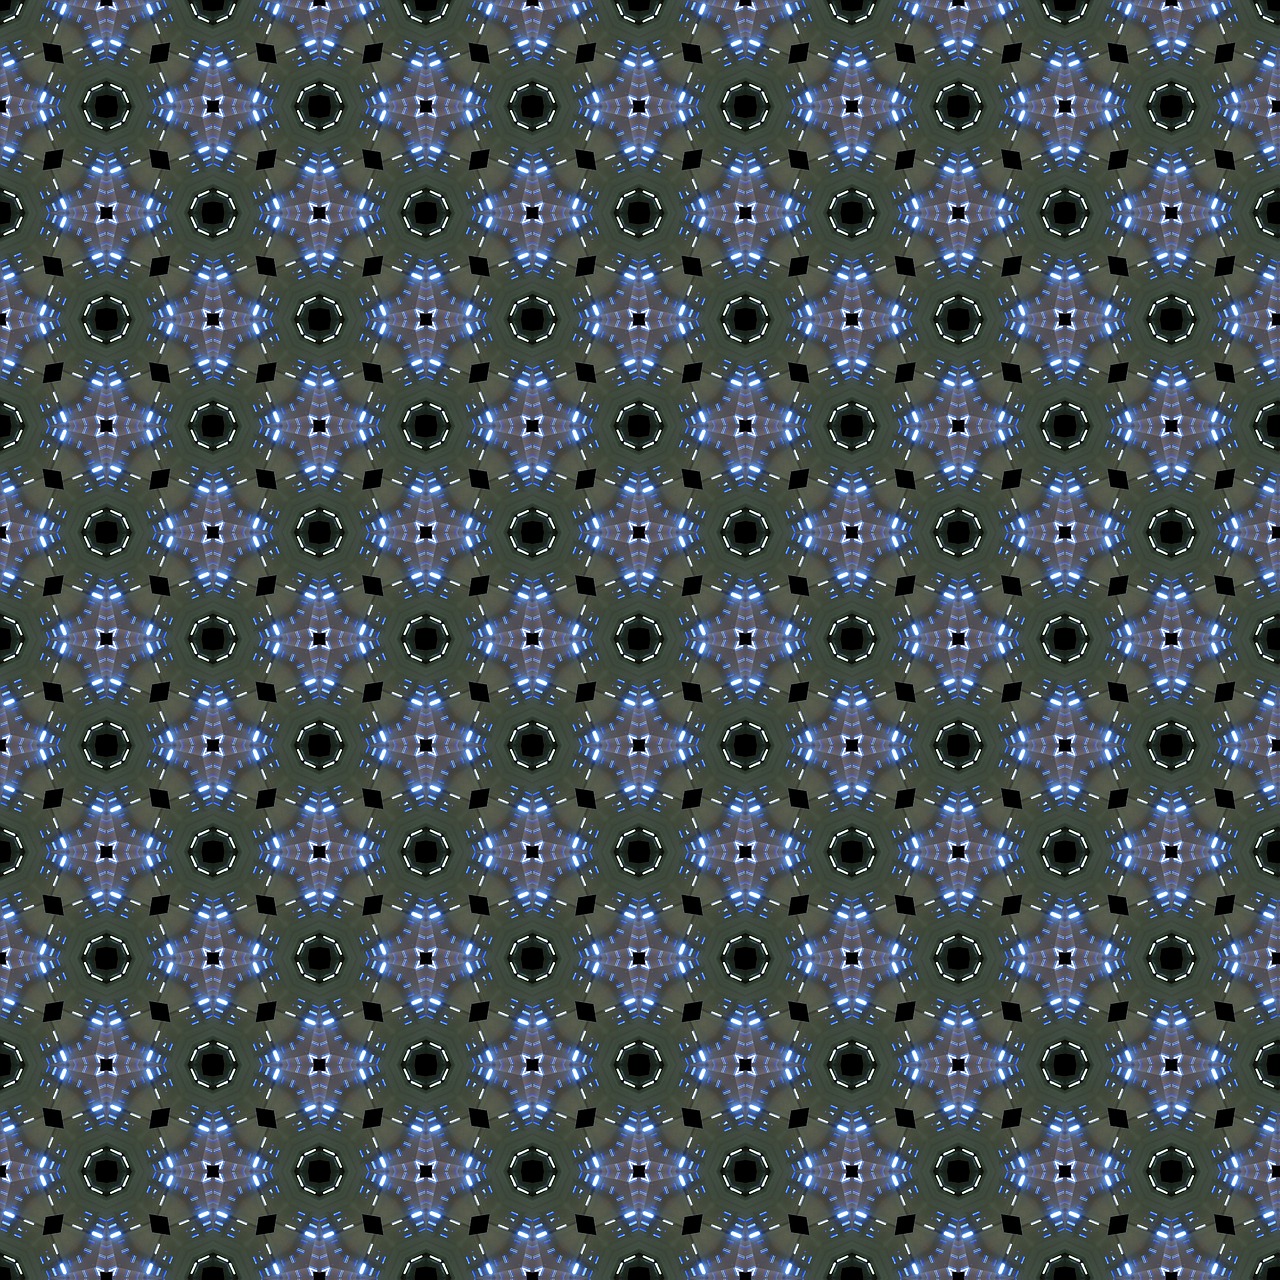 space wallpaper pattern free photo